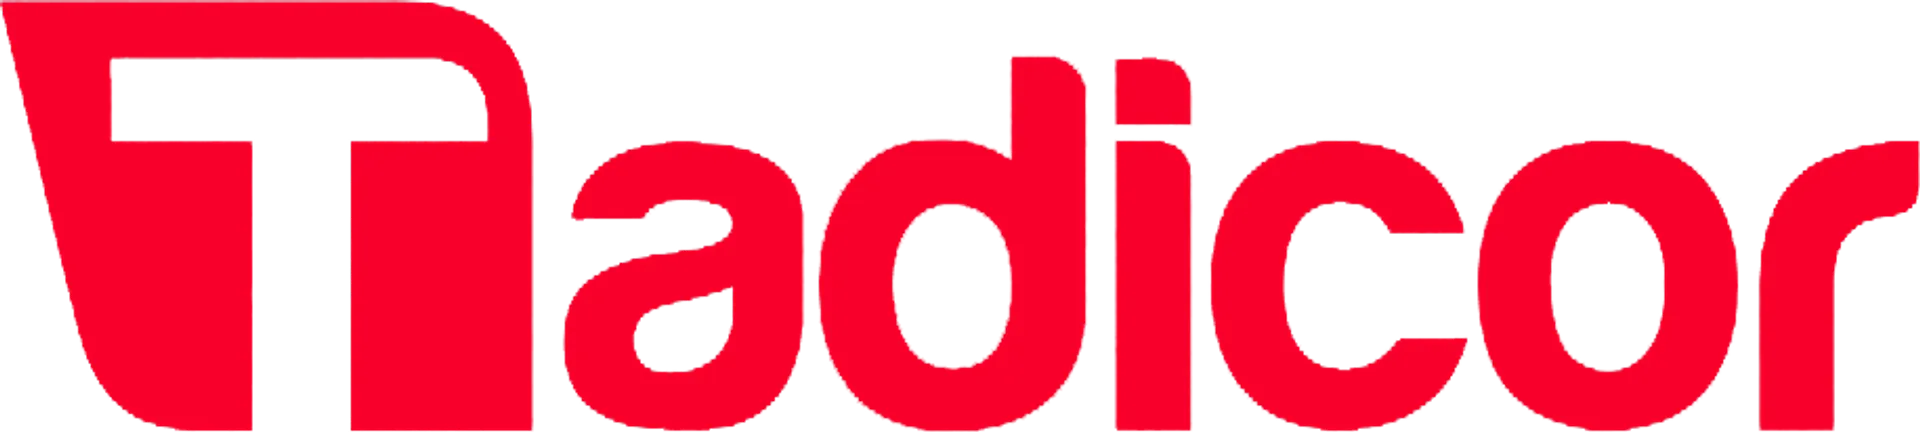 SUPERMERCADO TADICOR logo